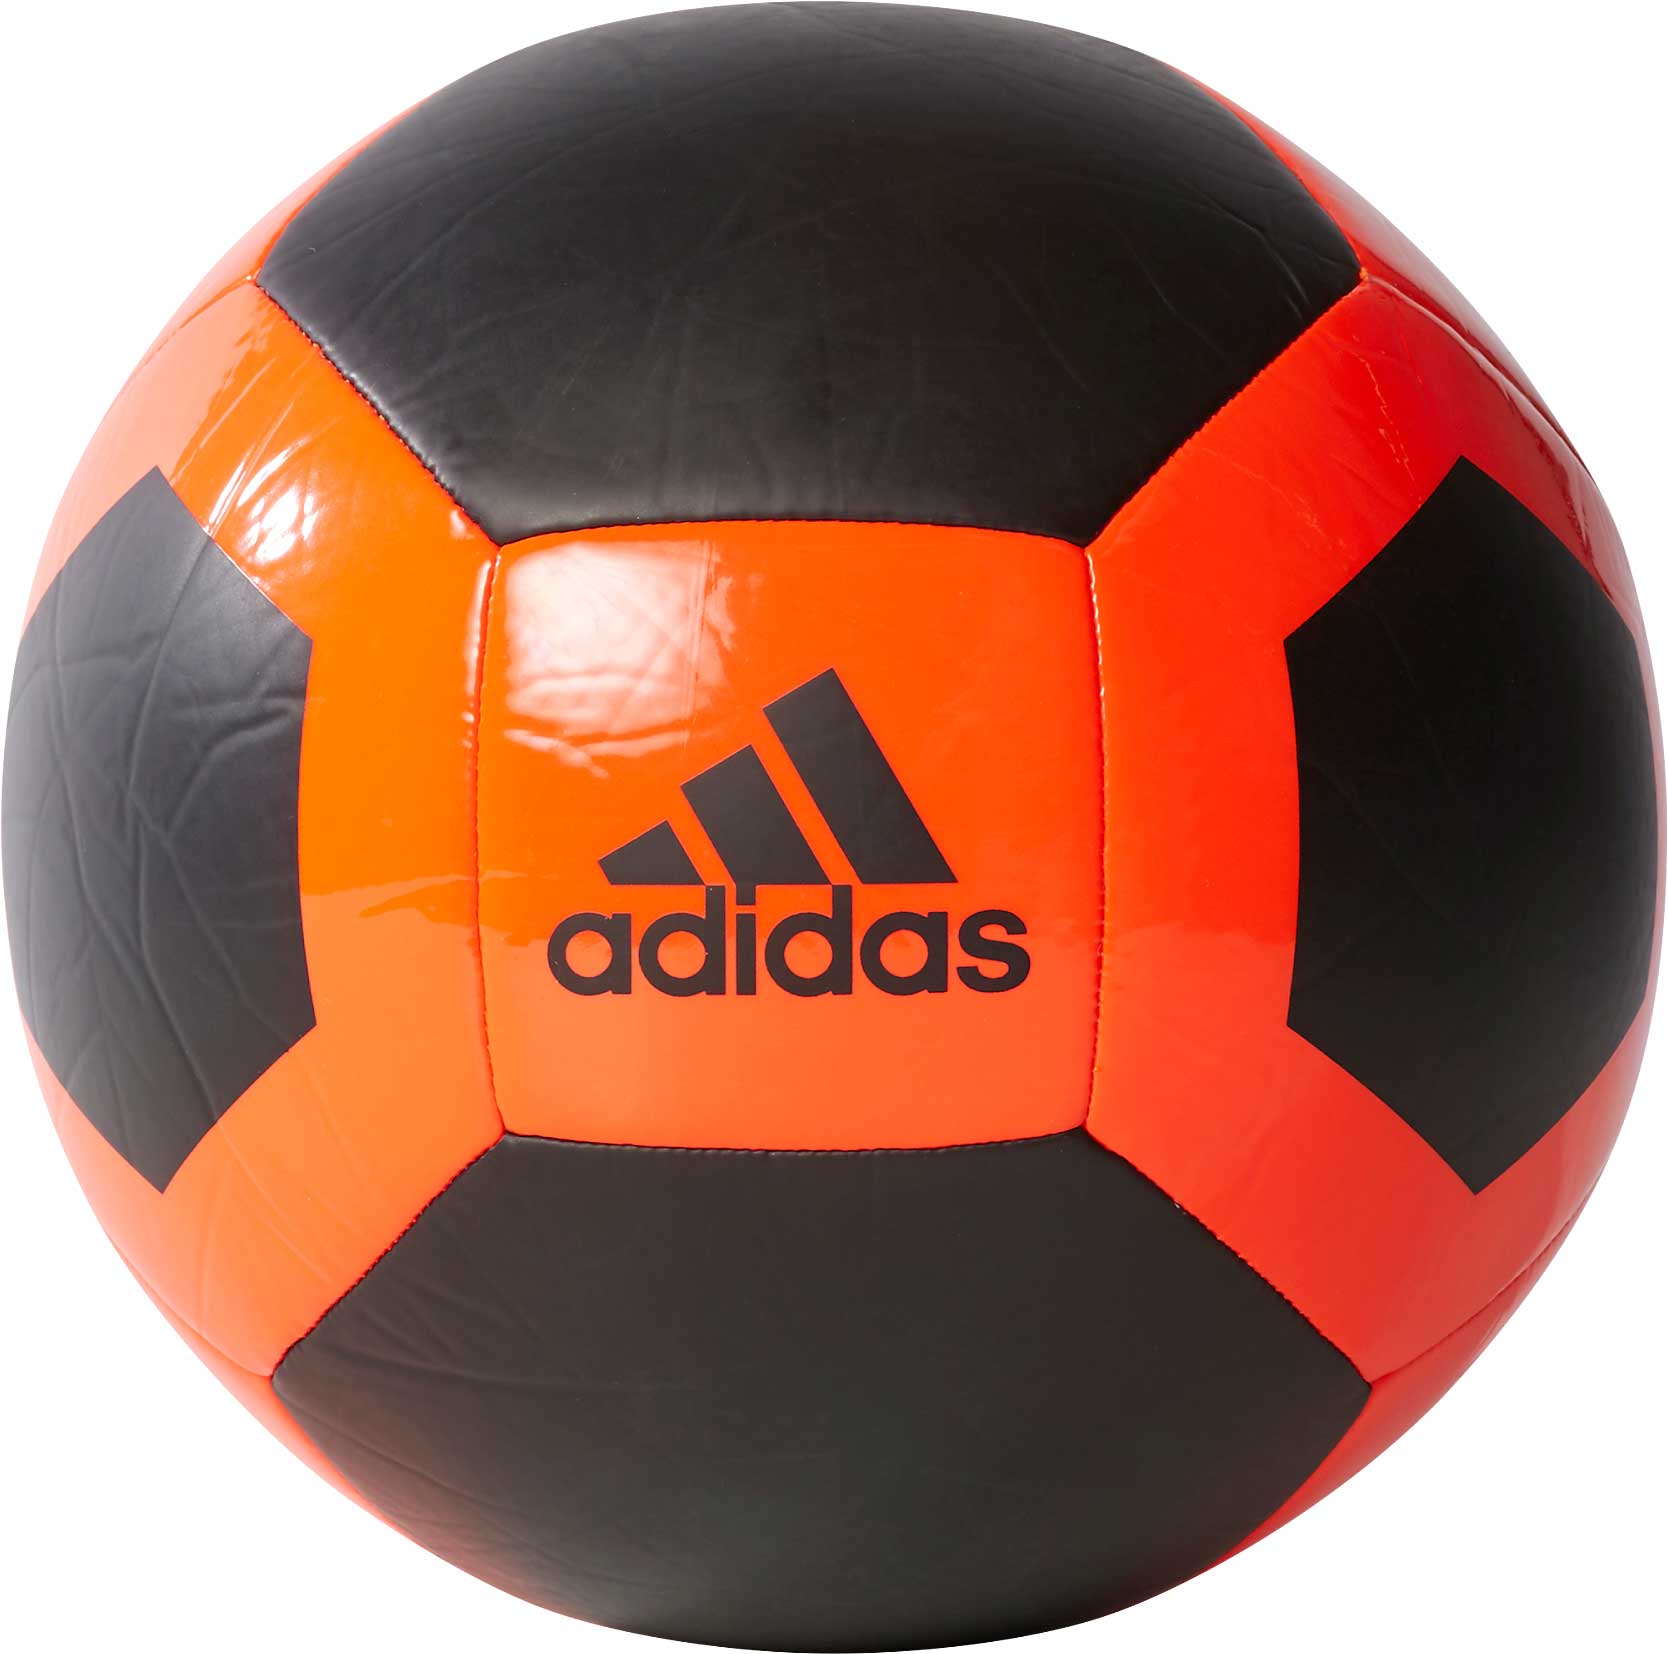 adidas glider 2 soccer ball